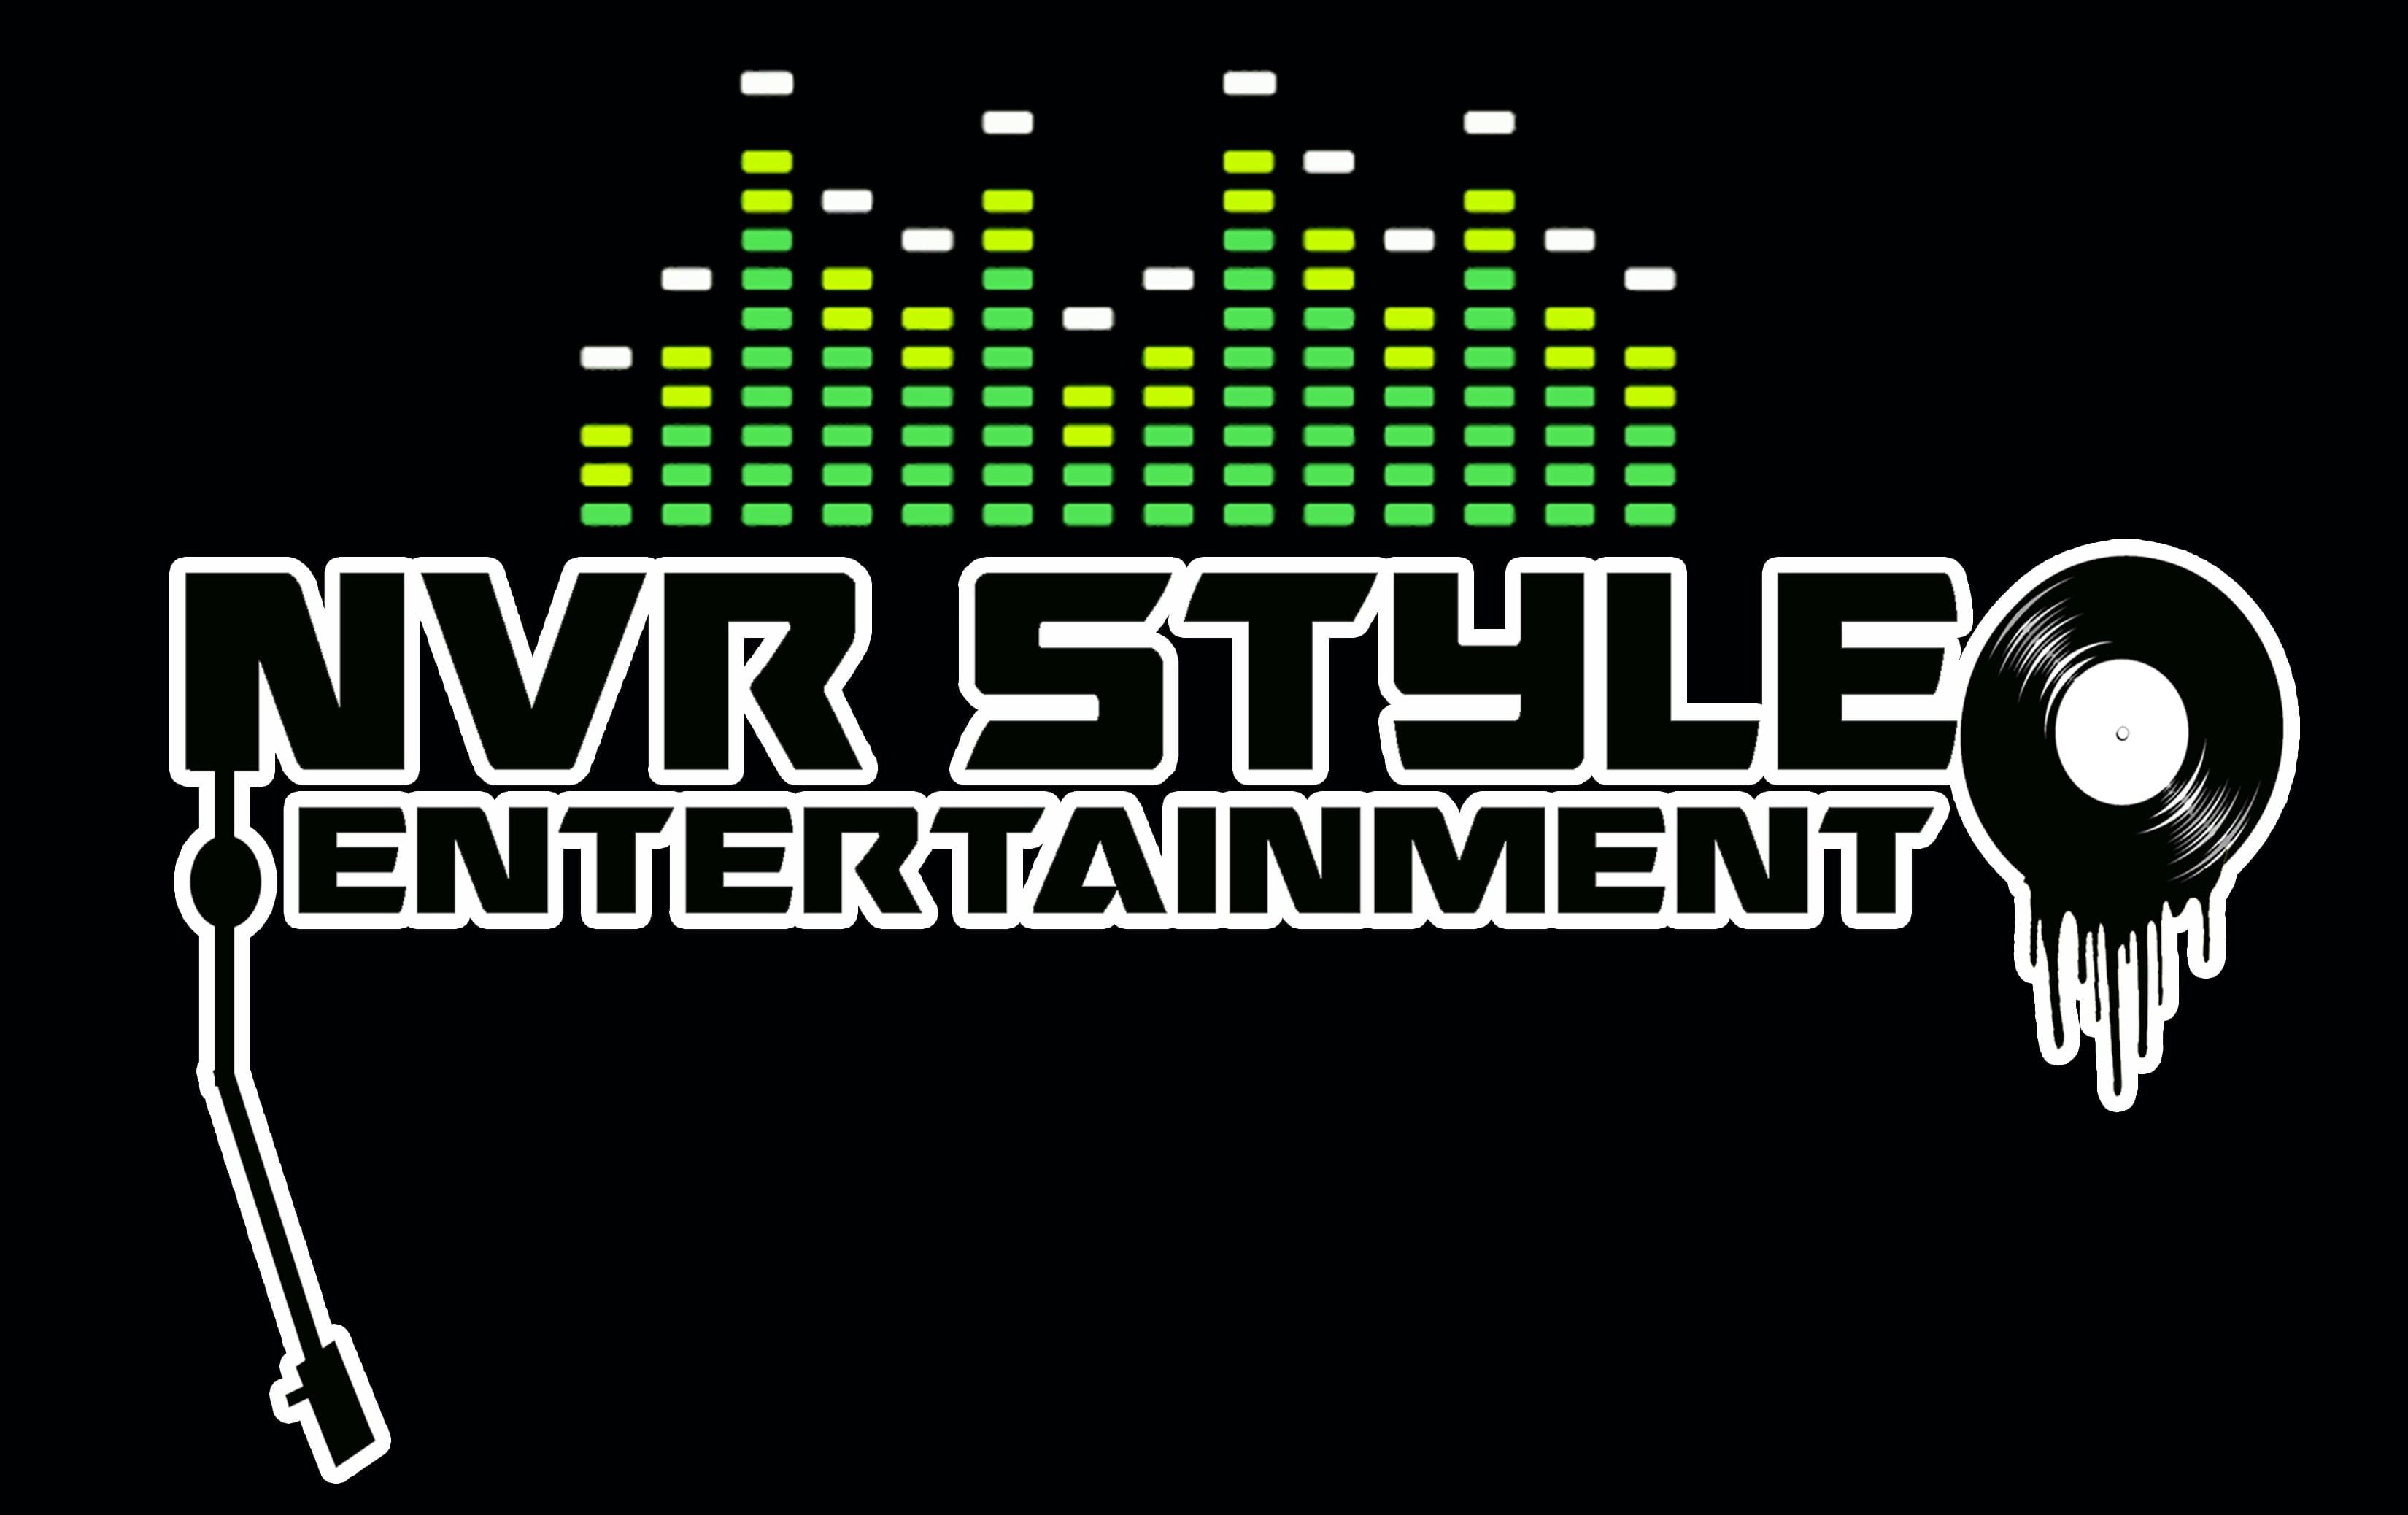 NVR Style Entertainment